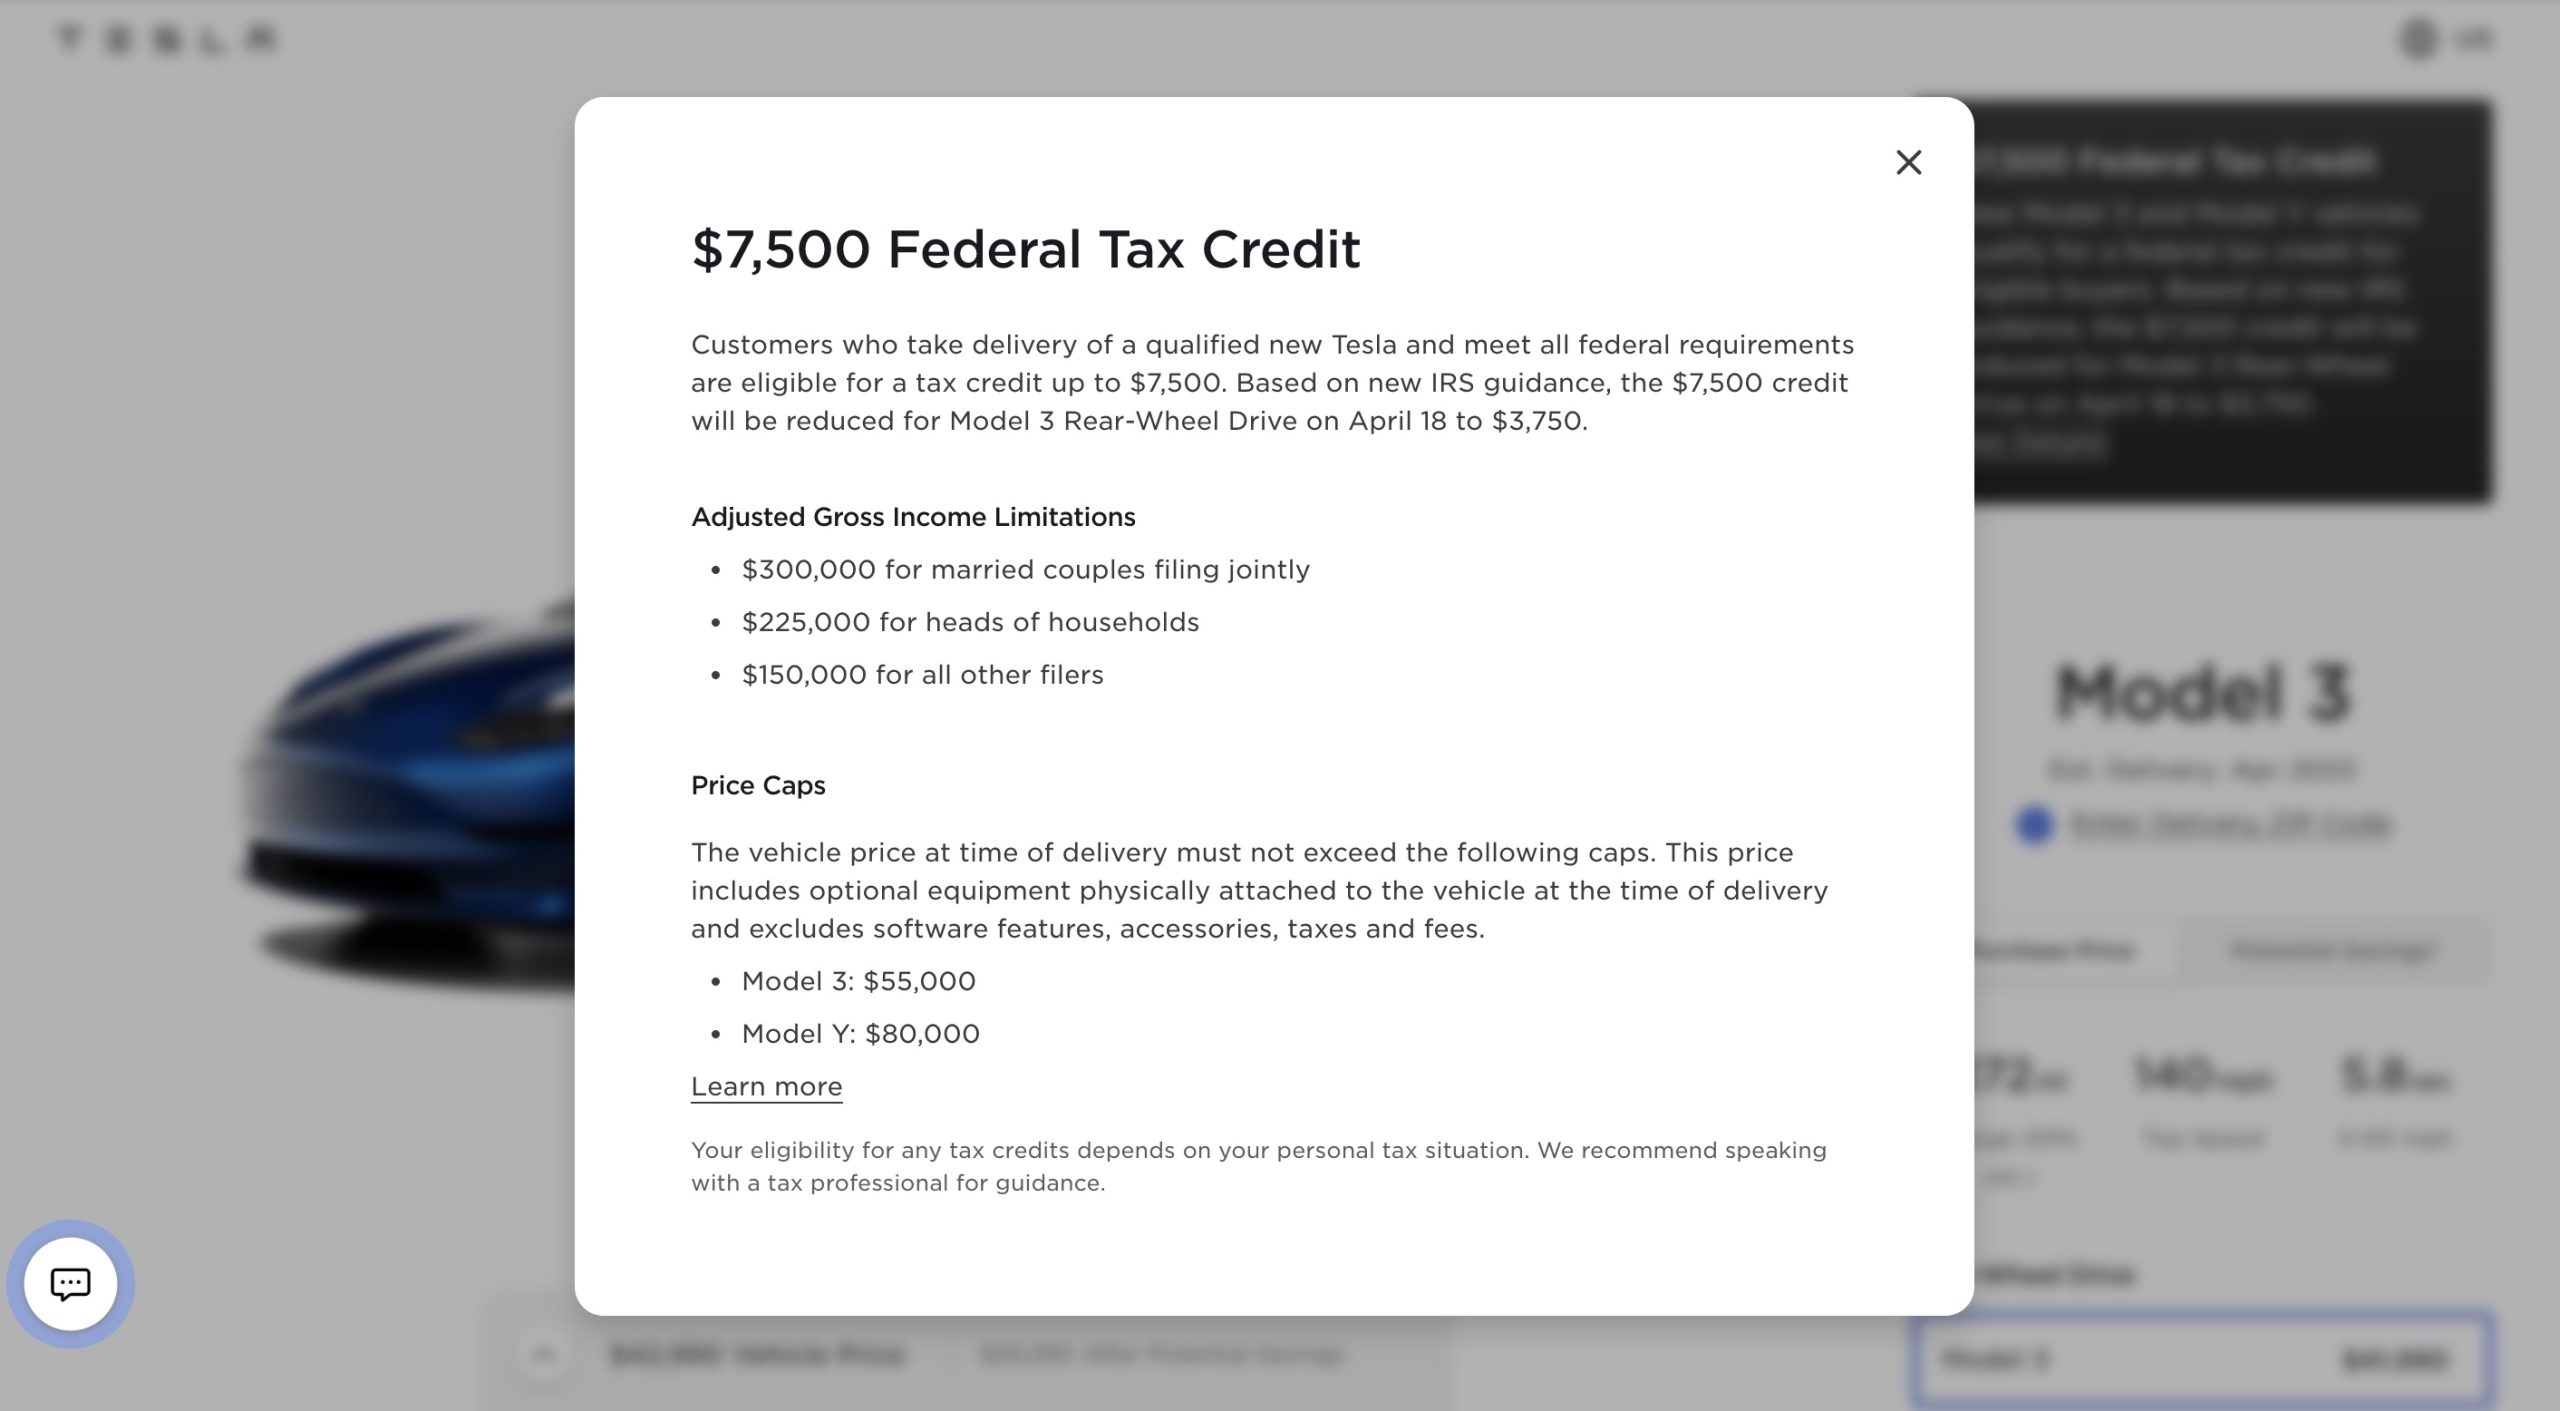 model-3-rwd-federal-tax-credit